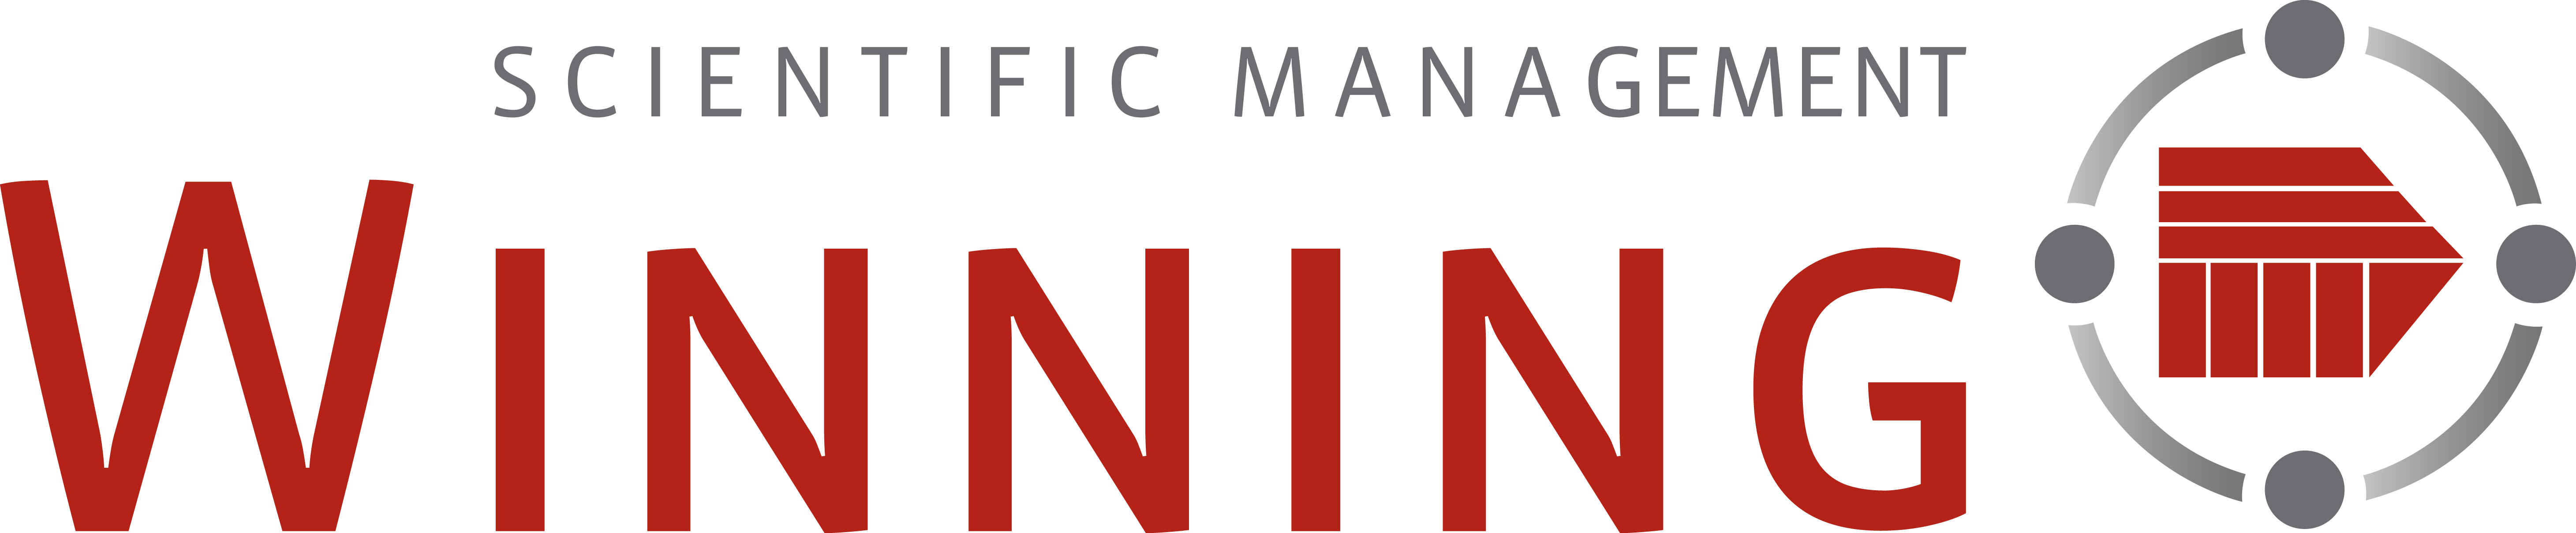 Winning Scientific Management Logo PNG